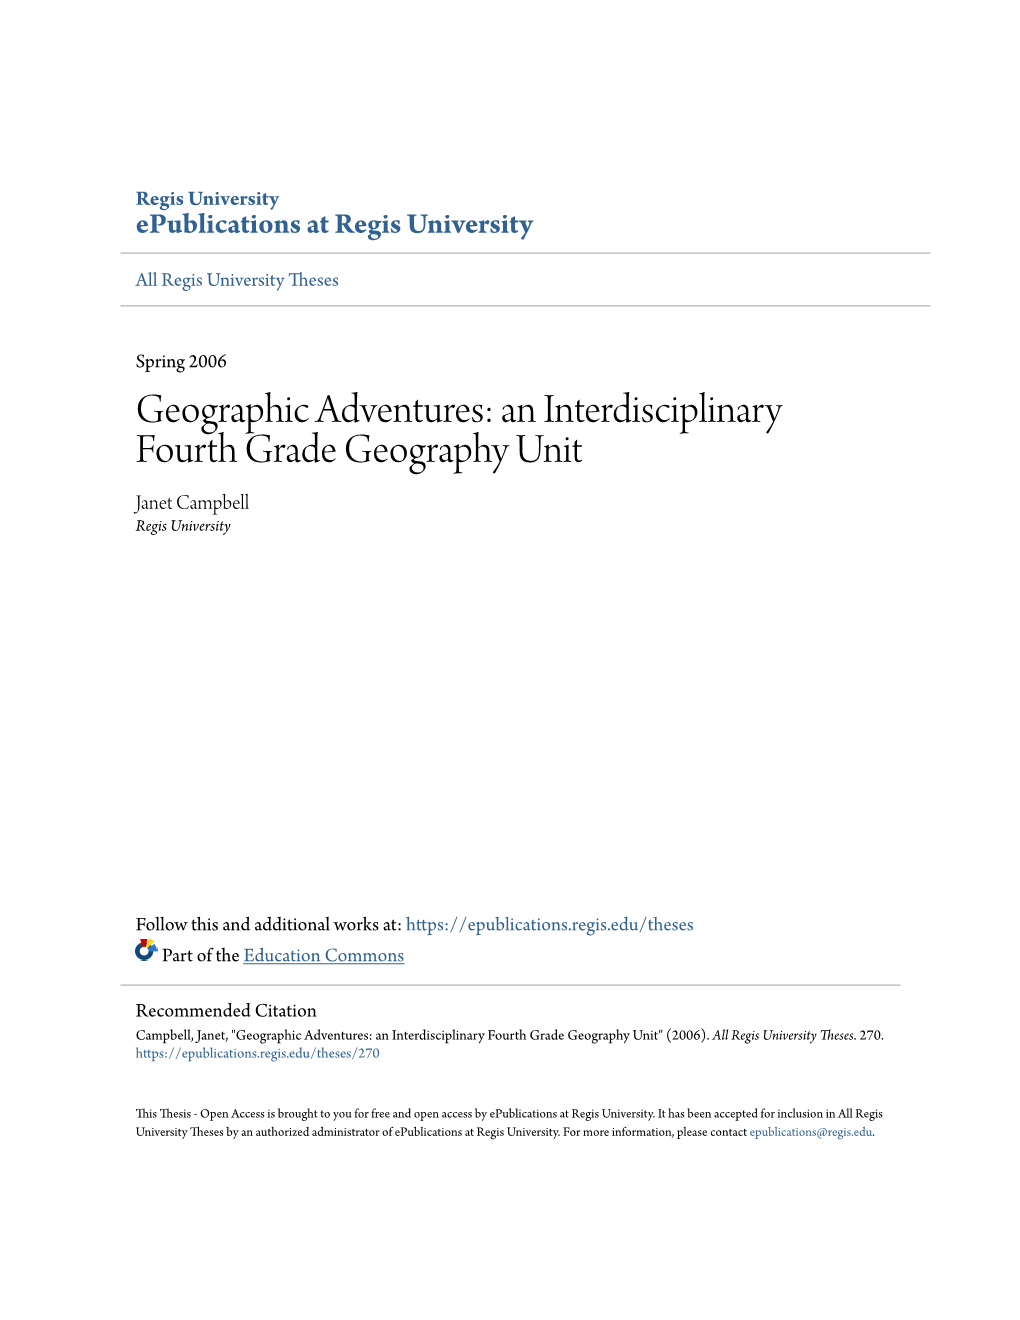 Geographic Adventures: an Interdisciplinary Fourth Grade Geography Unit Janet Campbell Regis University